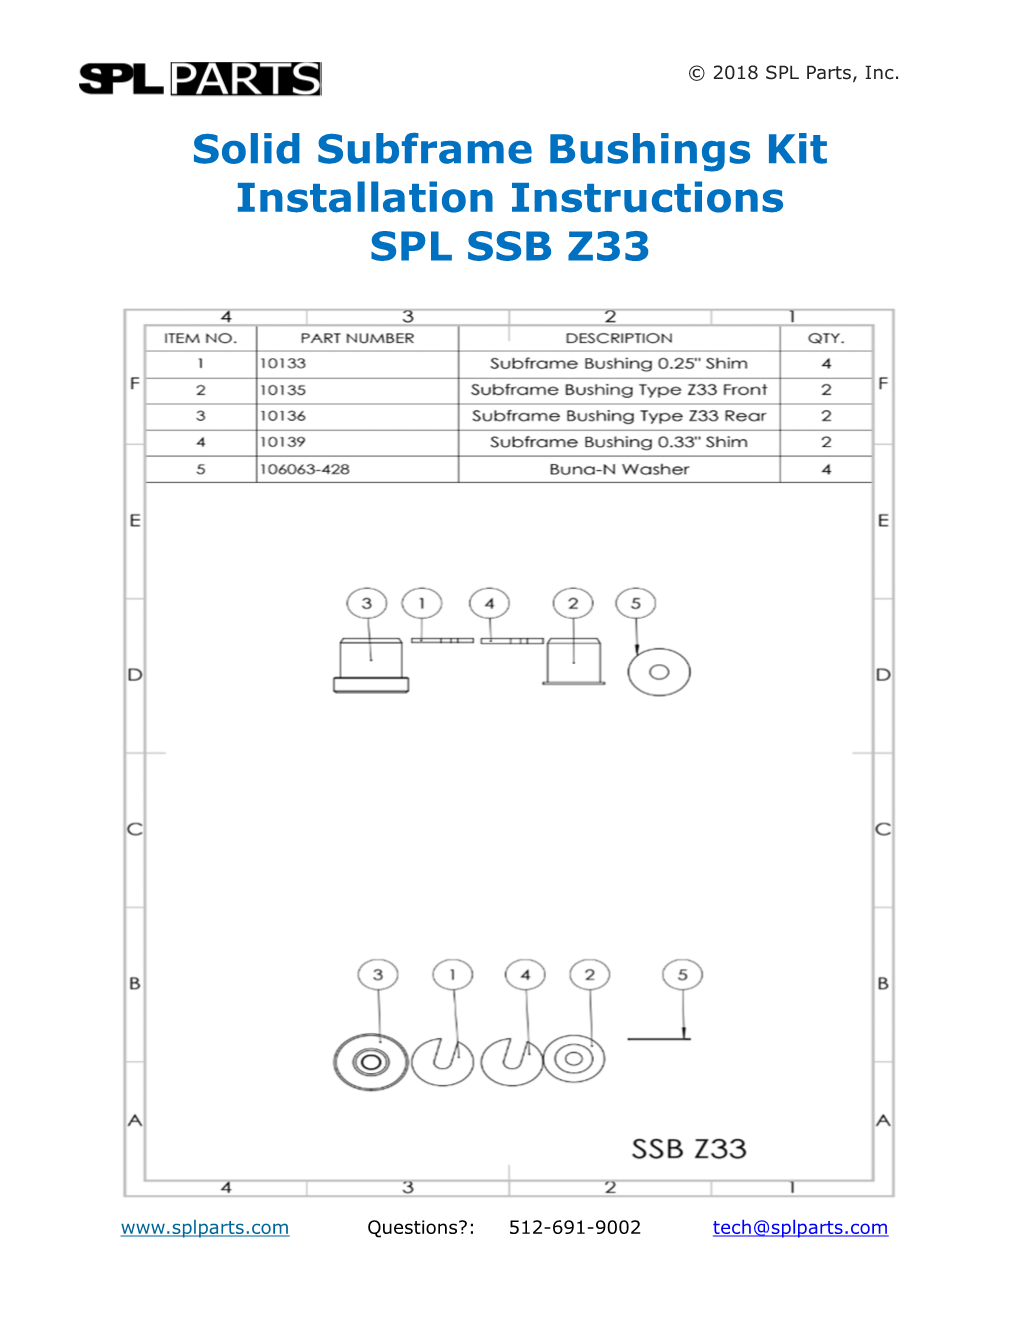 Solid Subframe Bushings Kit Installation Instructions SPL SSB Z33